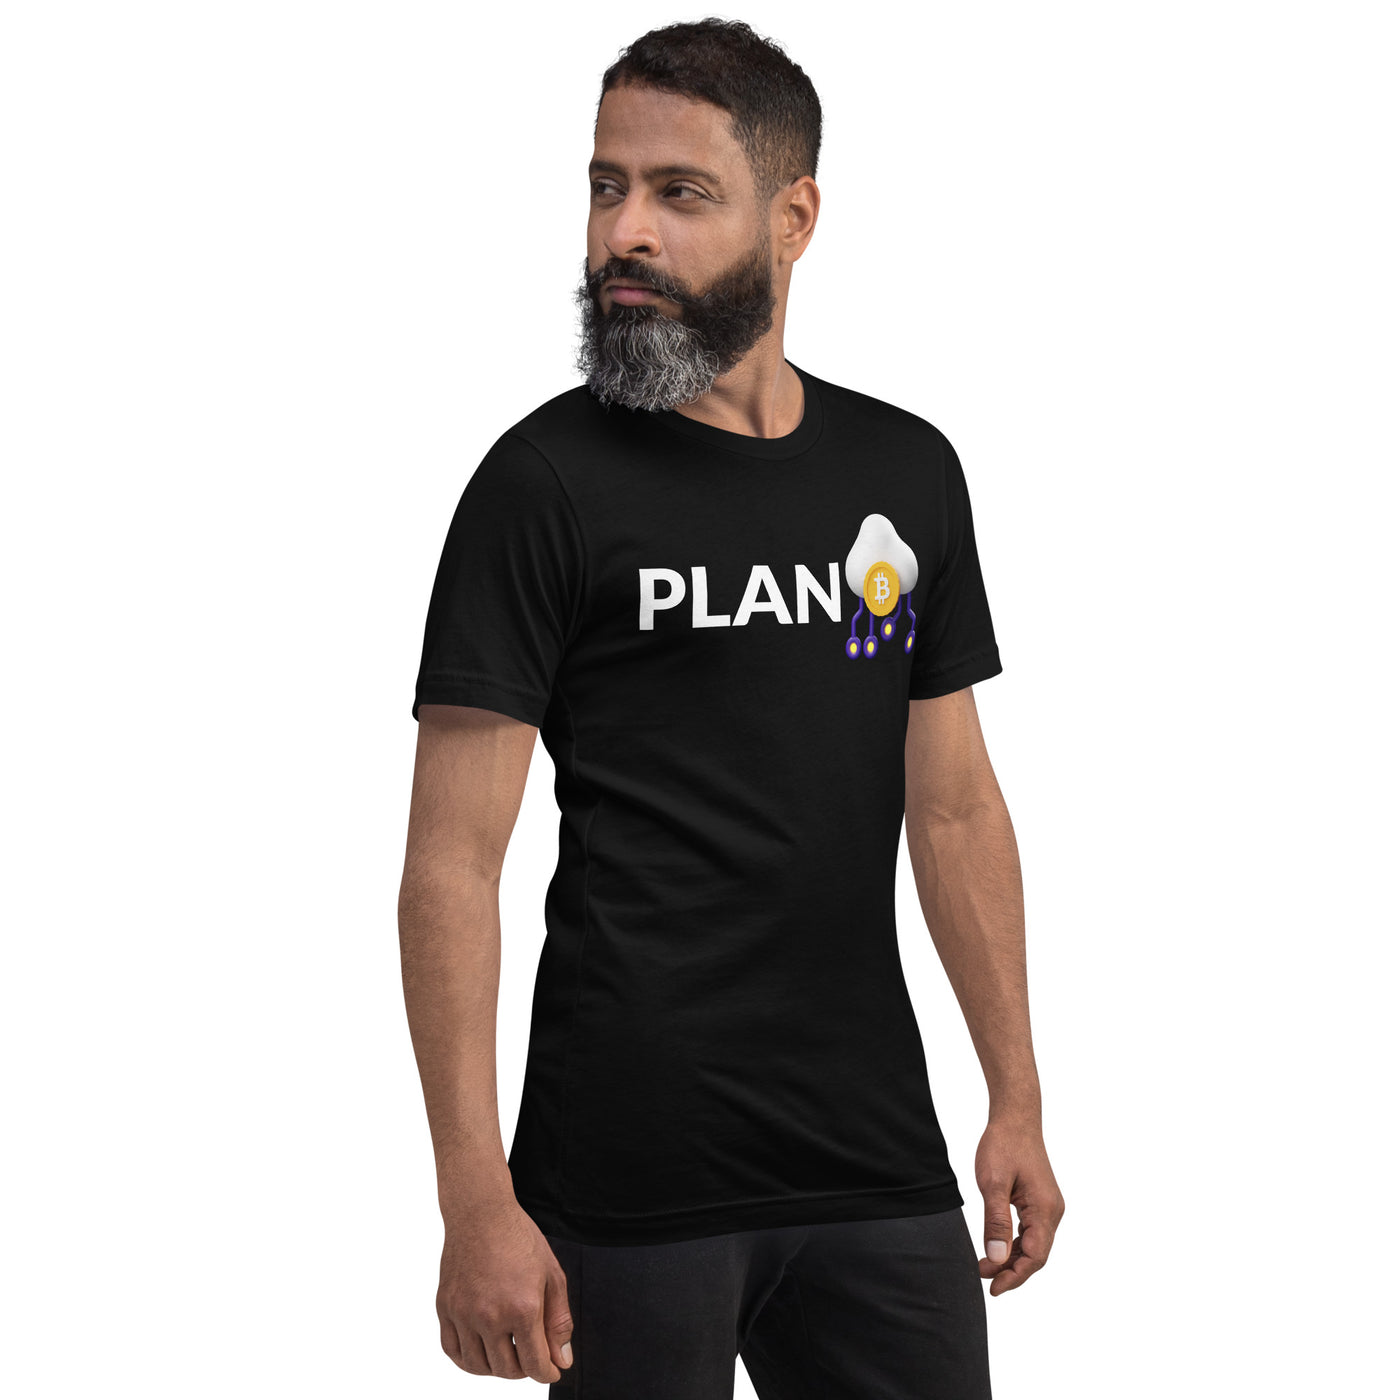 Plan B V5 Unisex t-shirt